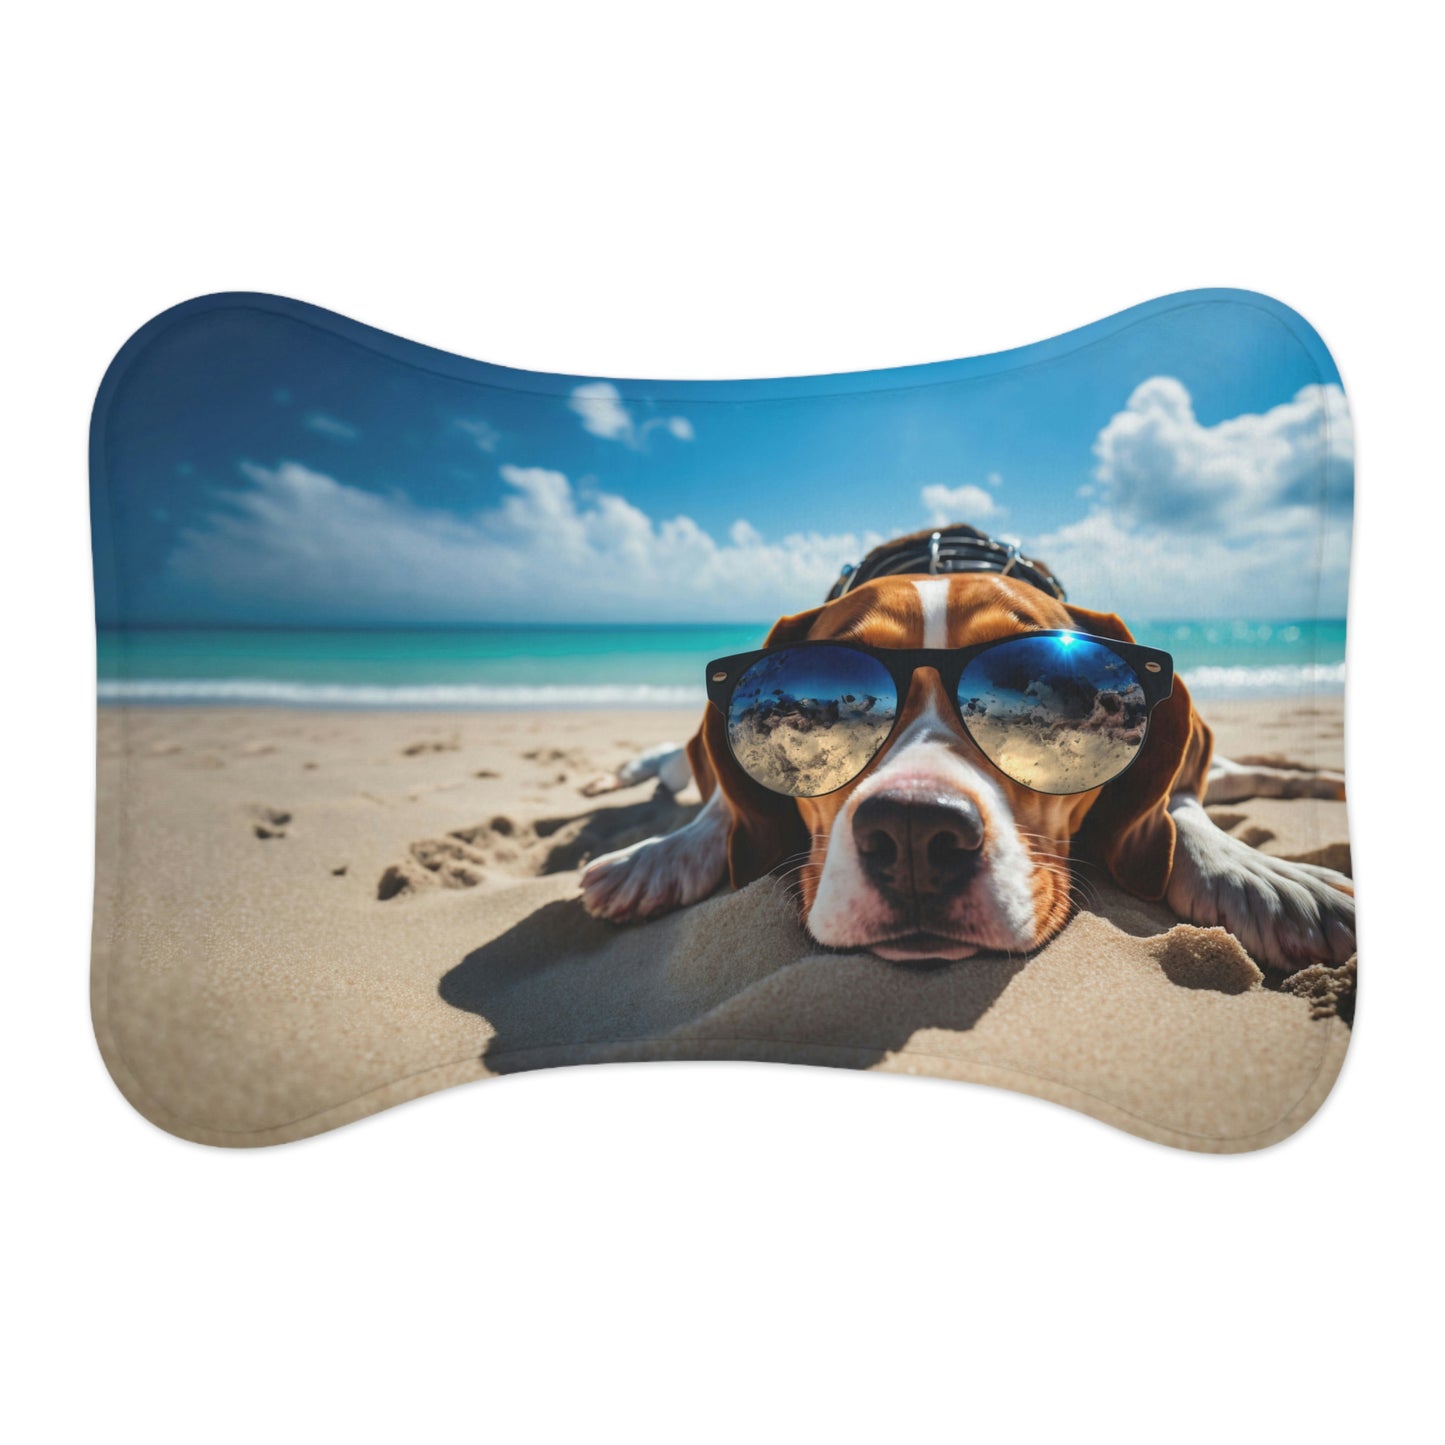 Sunbathing on Beach Dog Bowl Mat